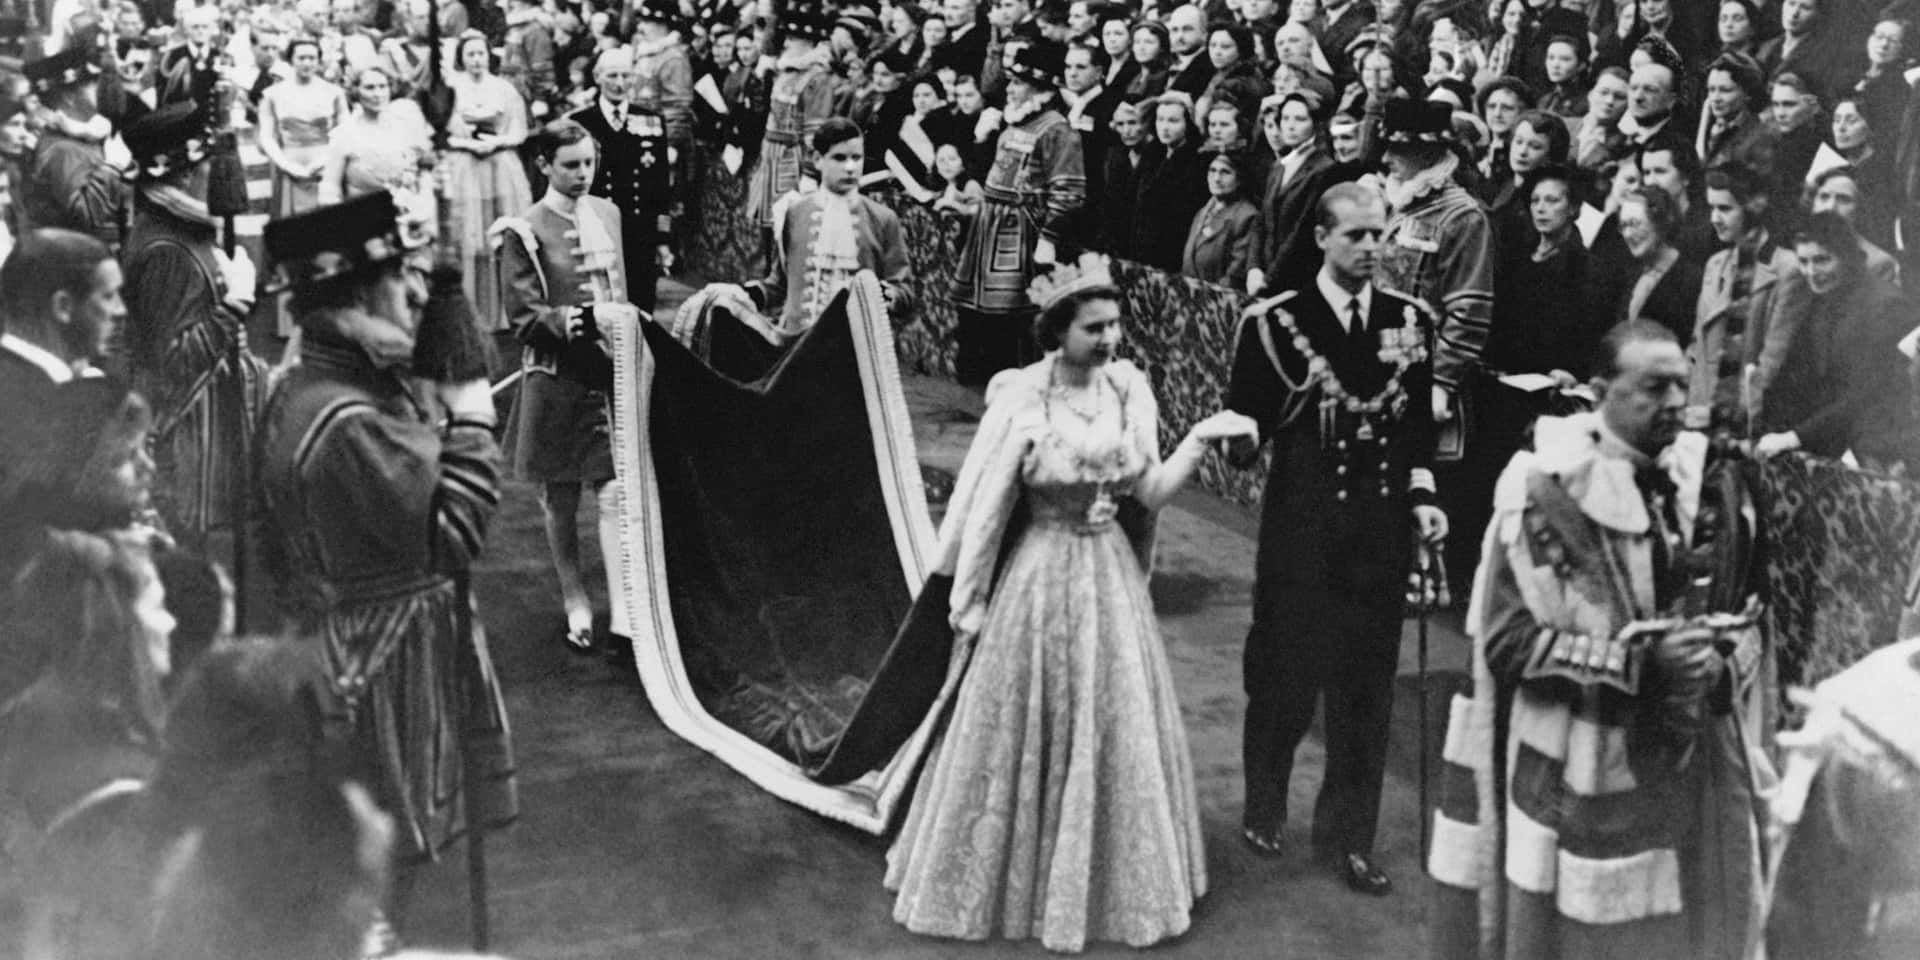 Caption: Her Majesty Queen Elizabeth II in Elegant Attire